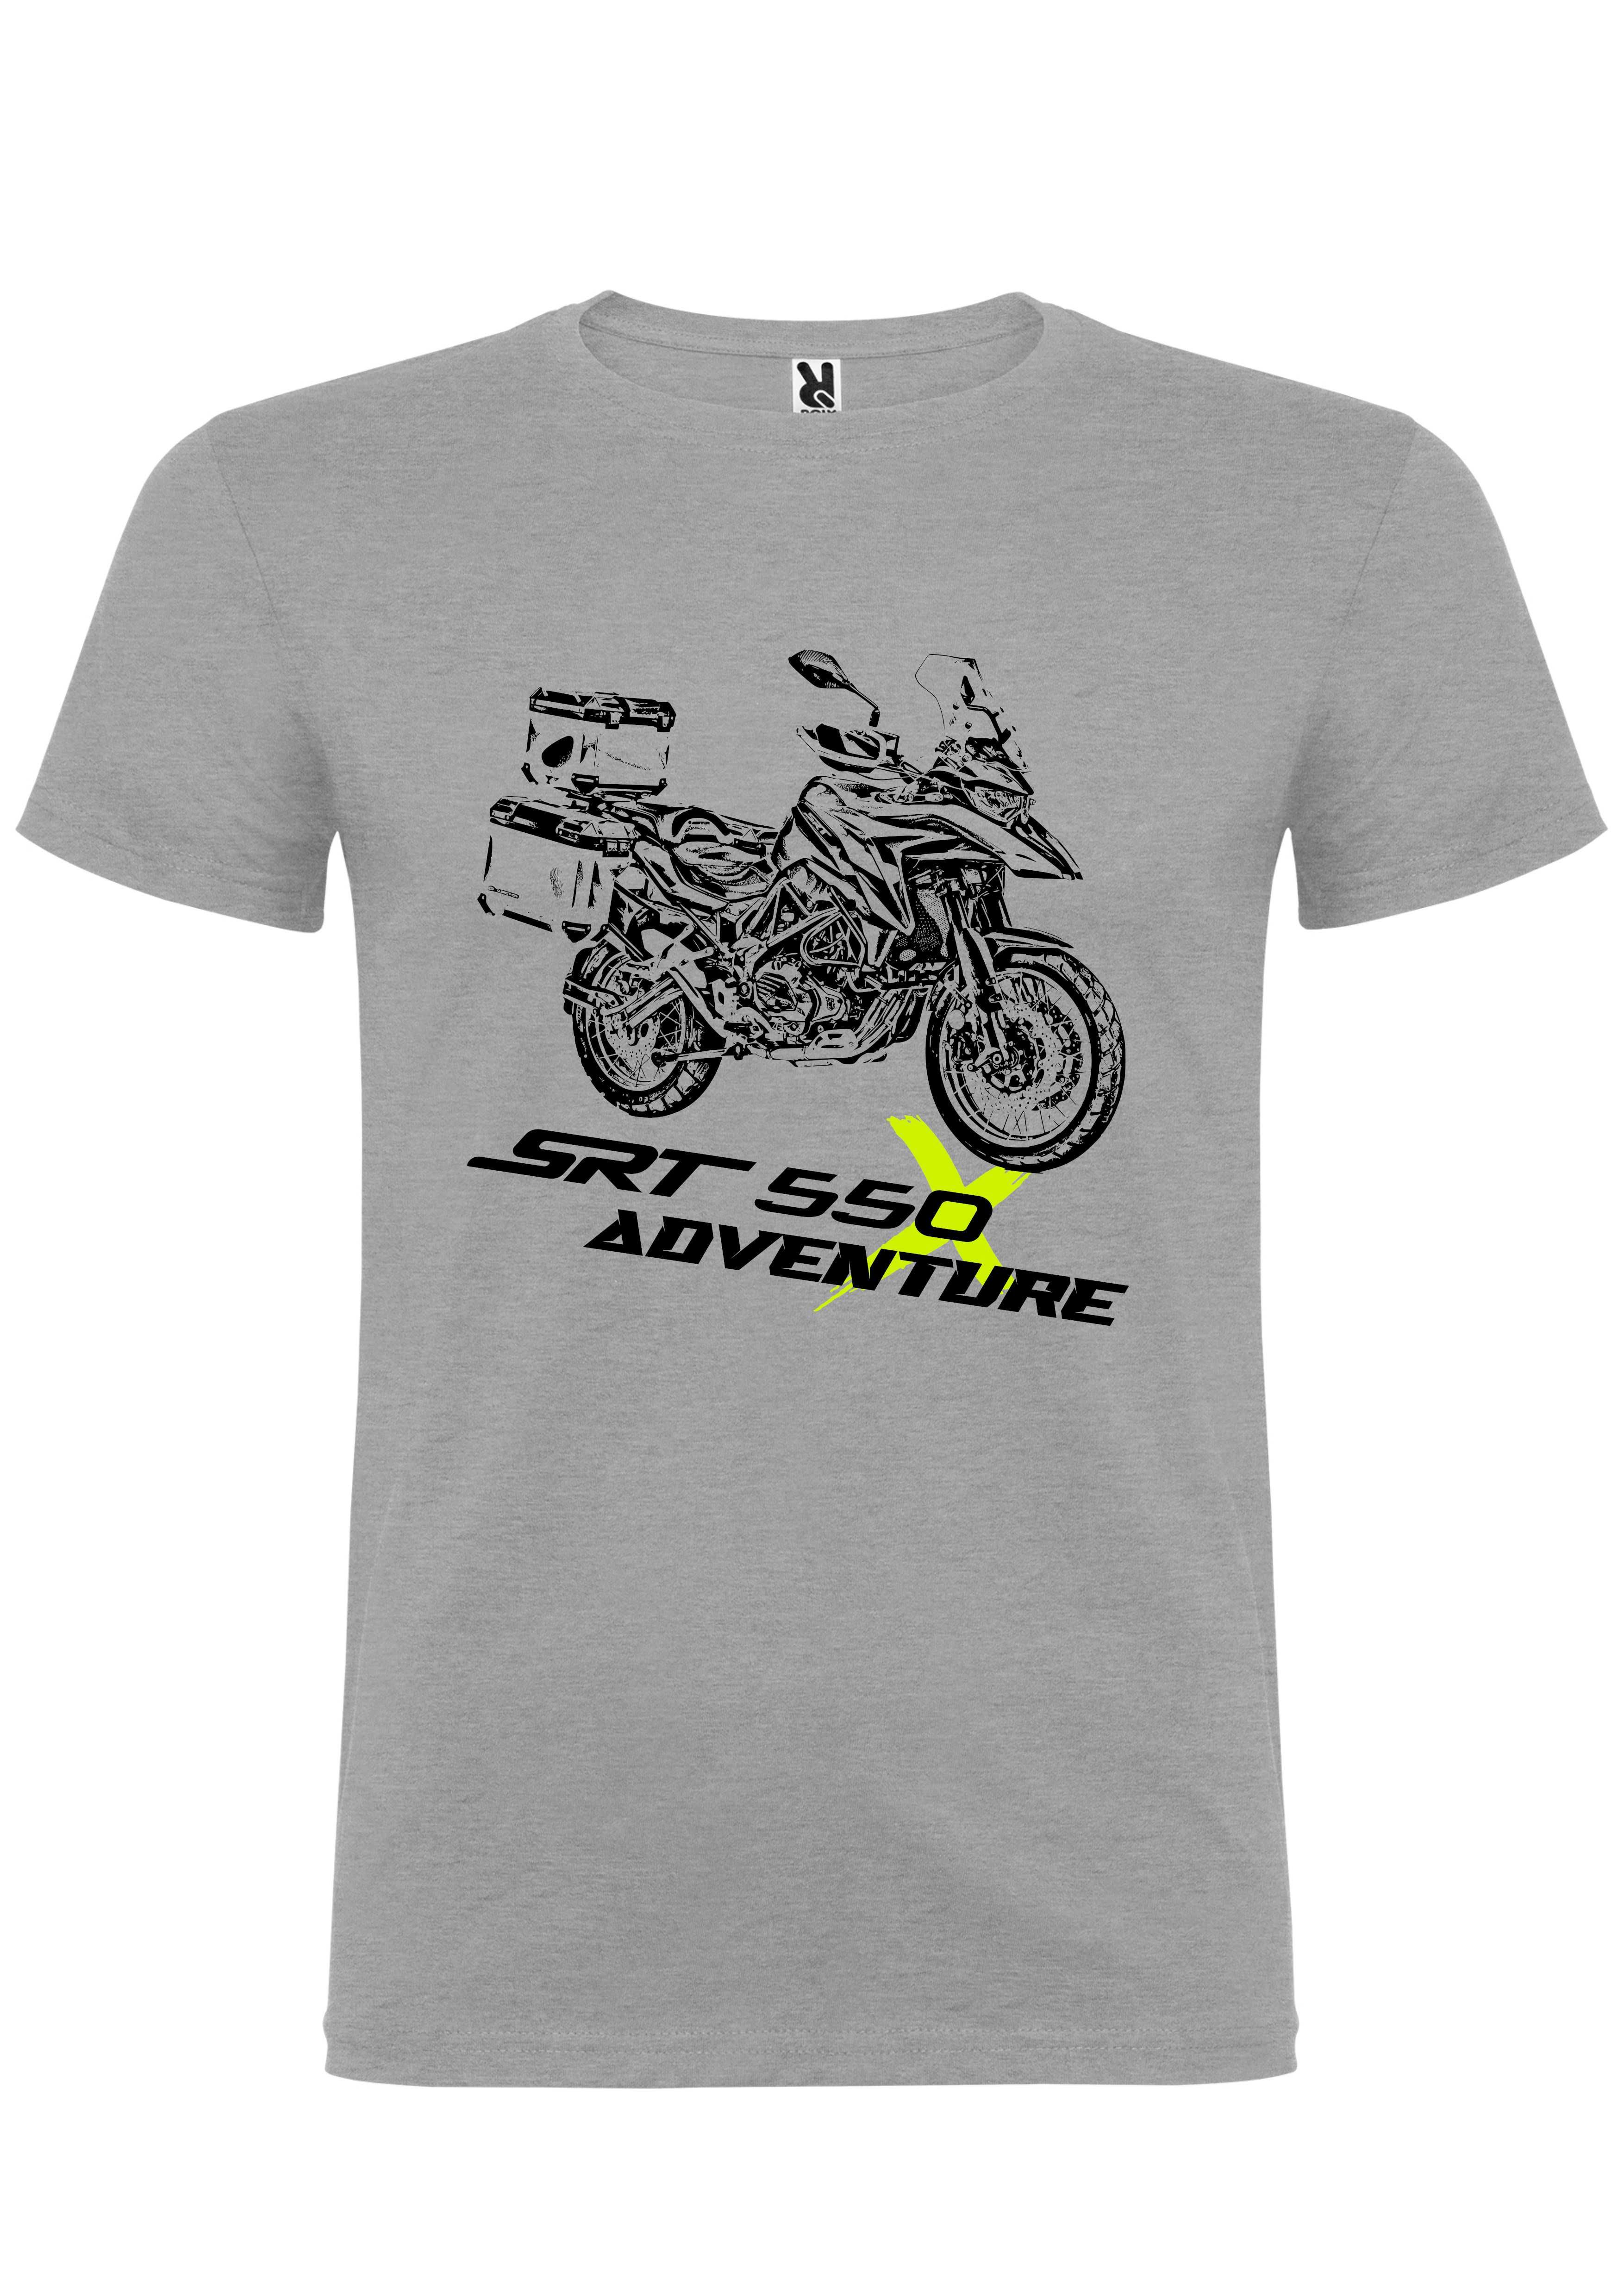 T-shirt QJ Motor SRT 550X Adventure